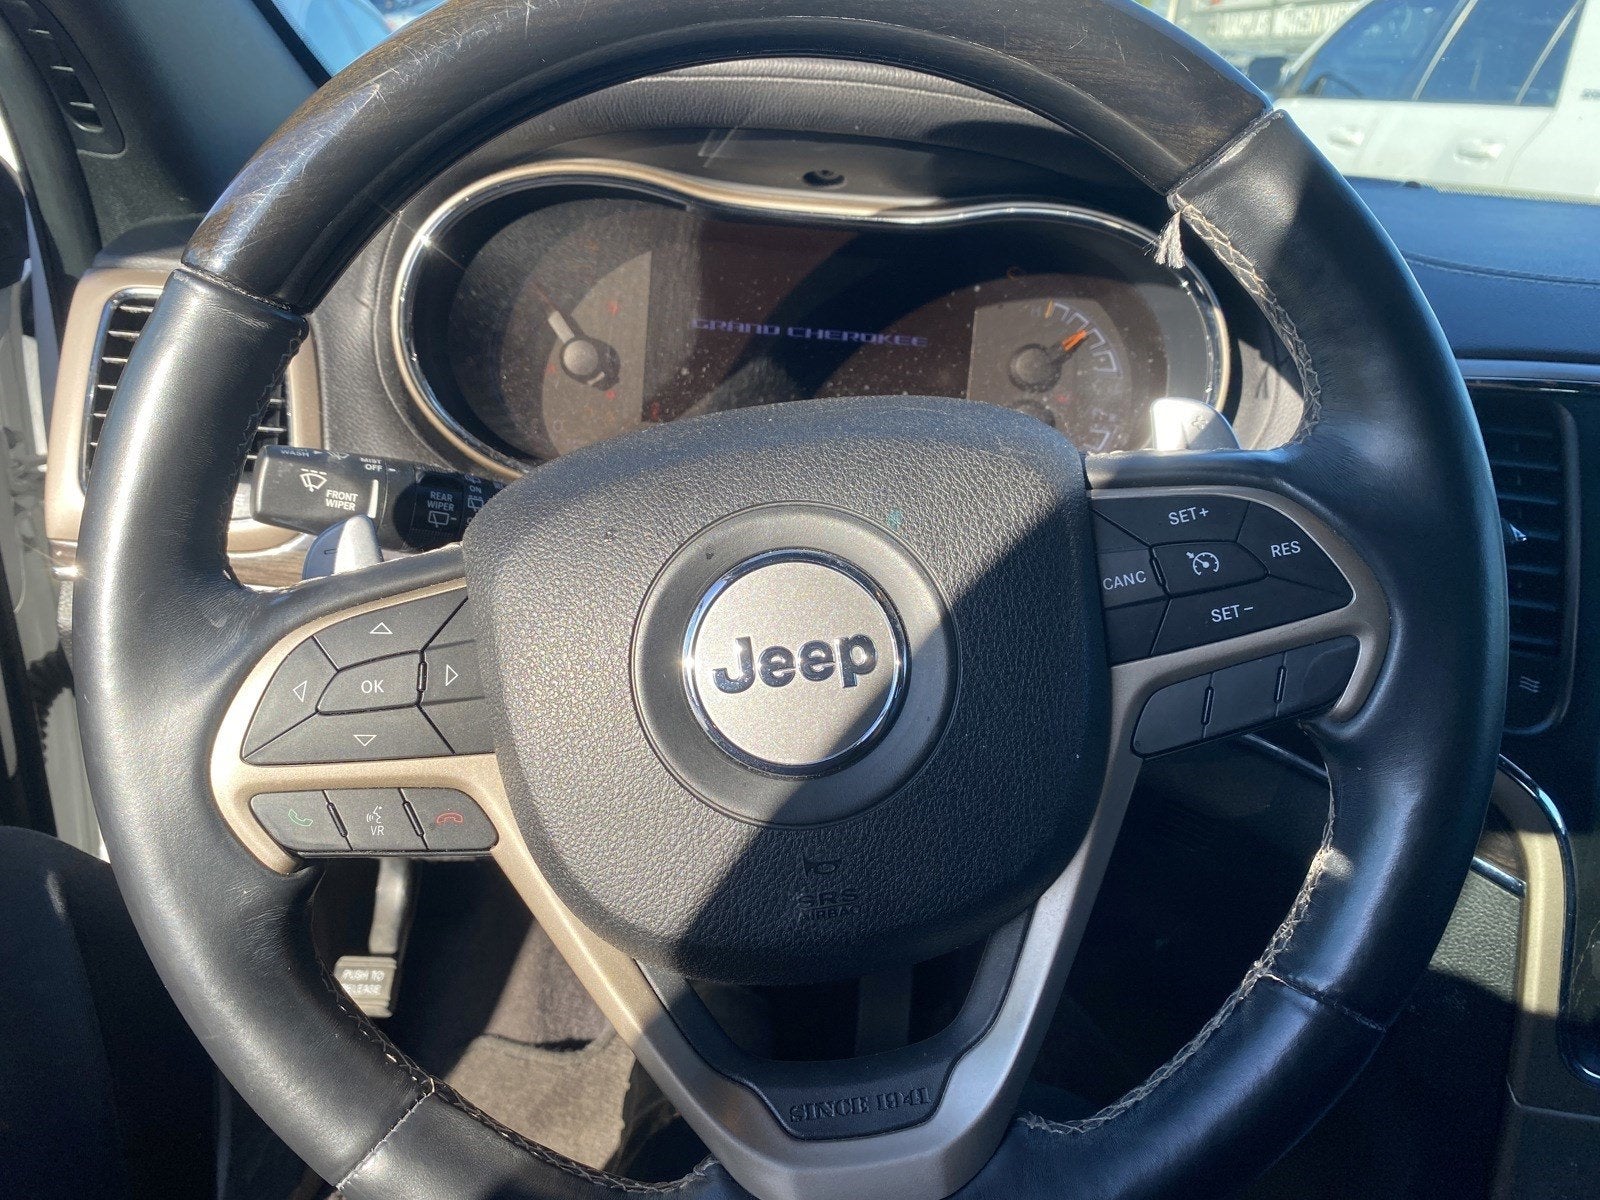 2016 Jeep Grand Cherokee Overland